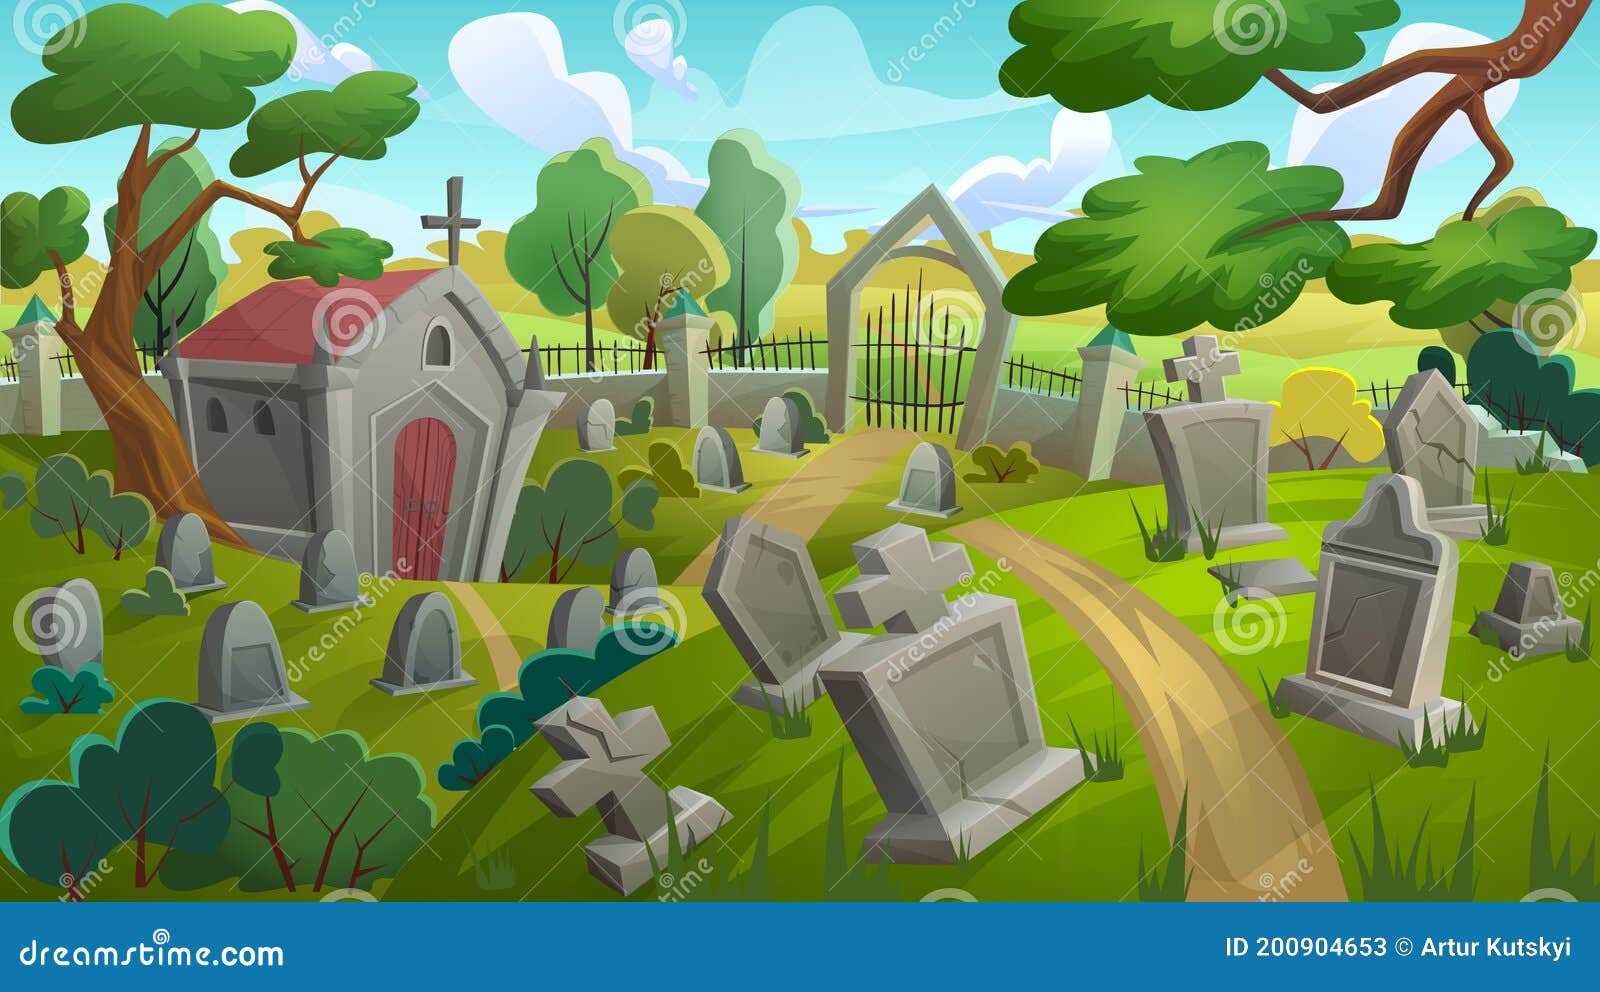 Cemetery Graveyard Landscape with Old Memorial Tombstones Stock Vector